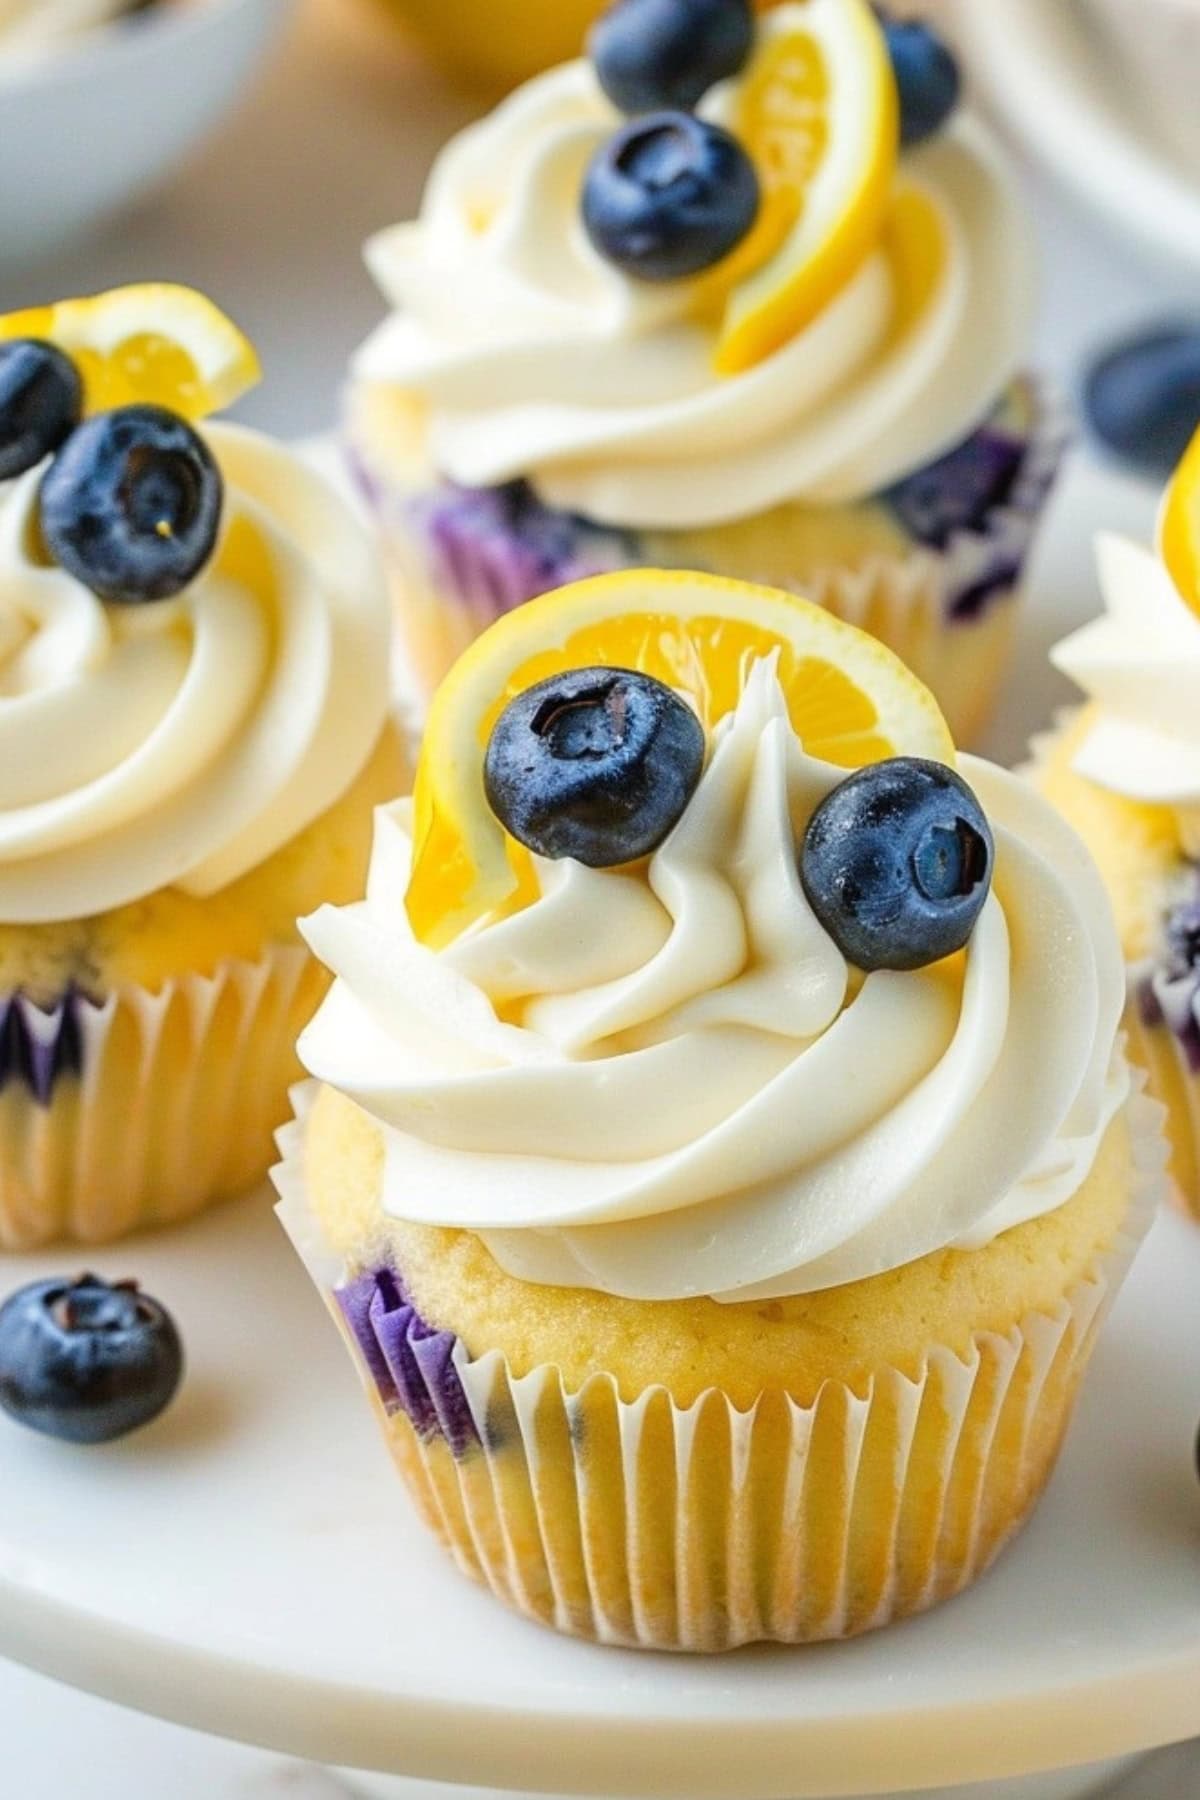 Lemon blueberry cupcakes arranged in cake tray.